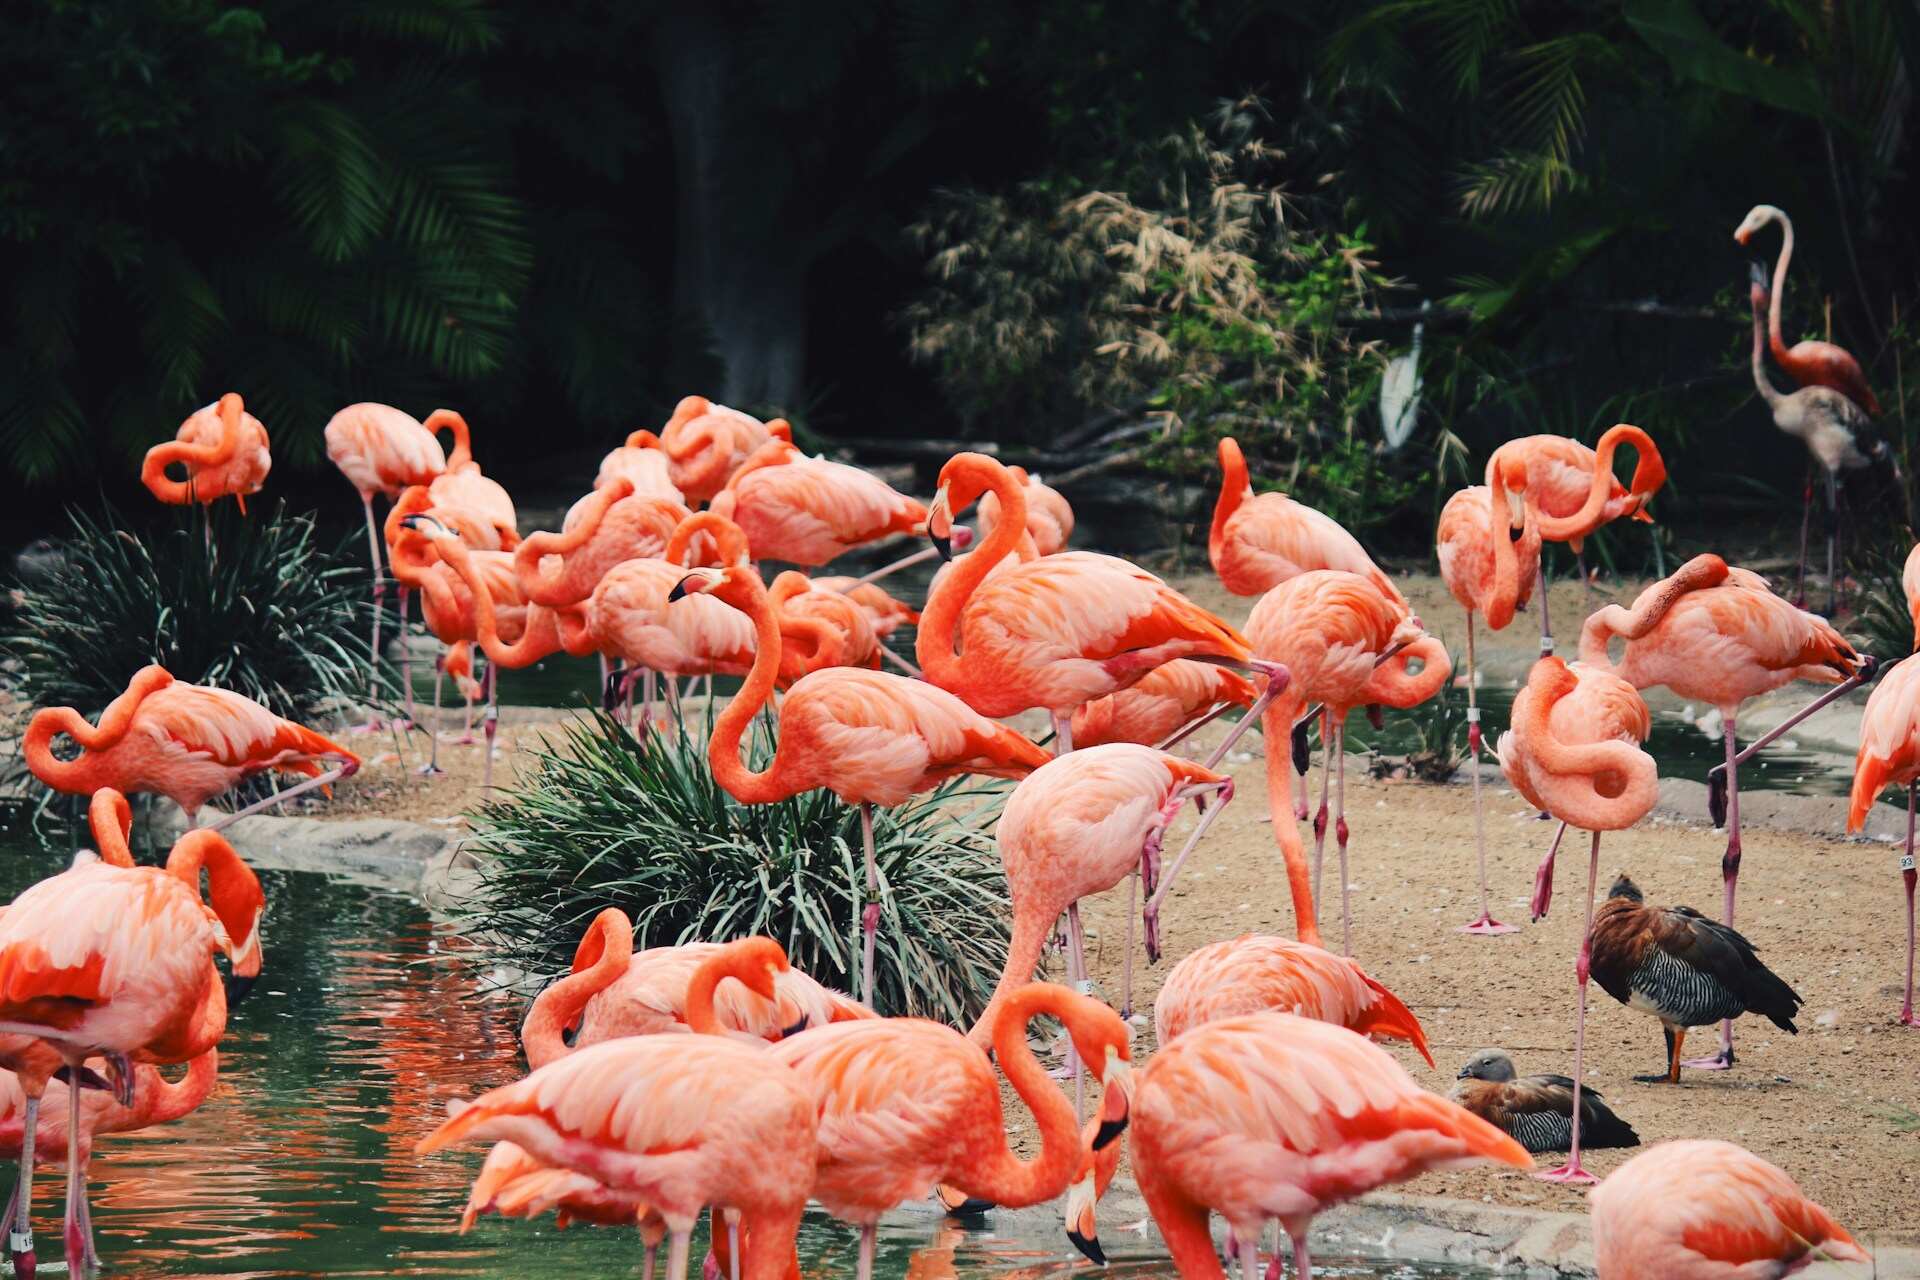 San Diego Zoo, San Diego, United States